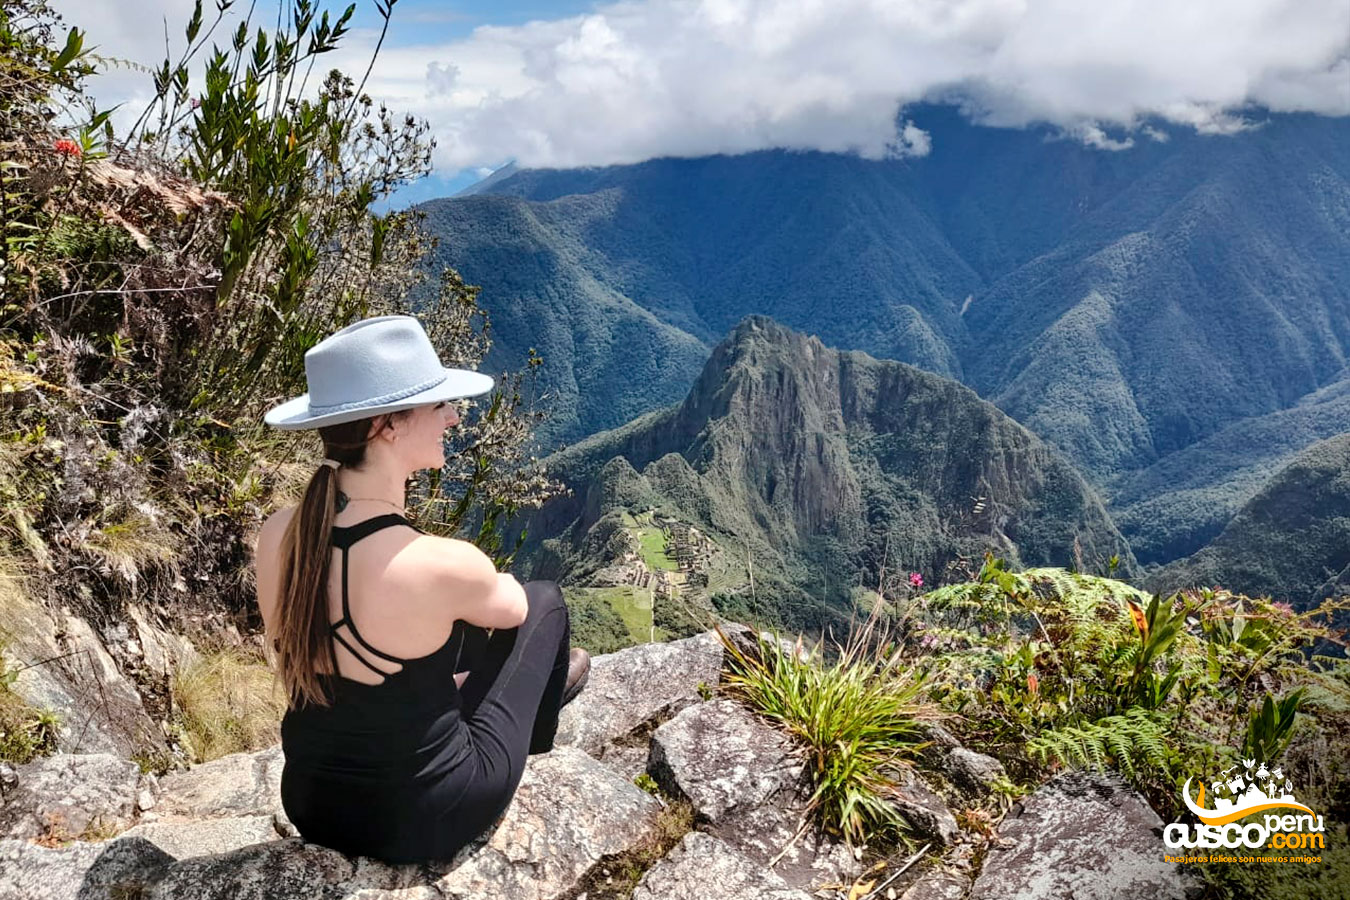 View from the viewpoint of Machu Picchu Mountain. Source: CuscoPeru.com